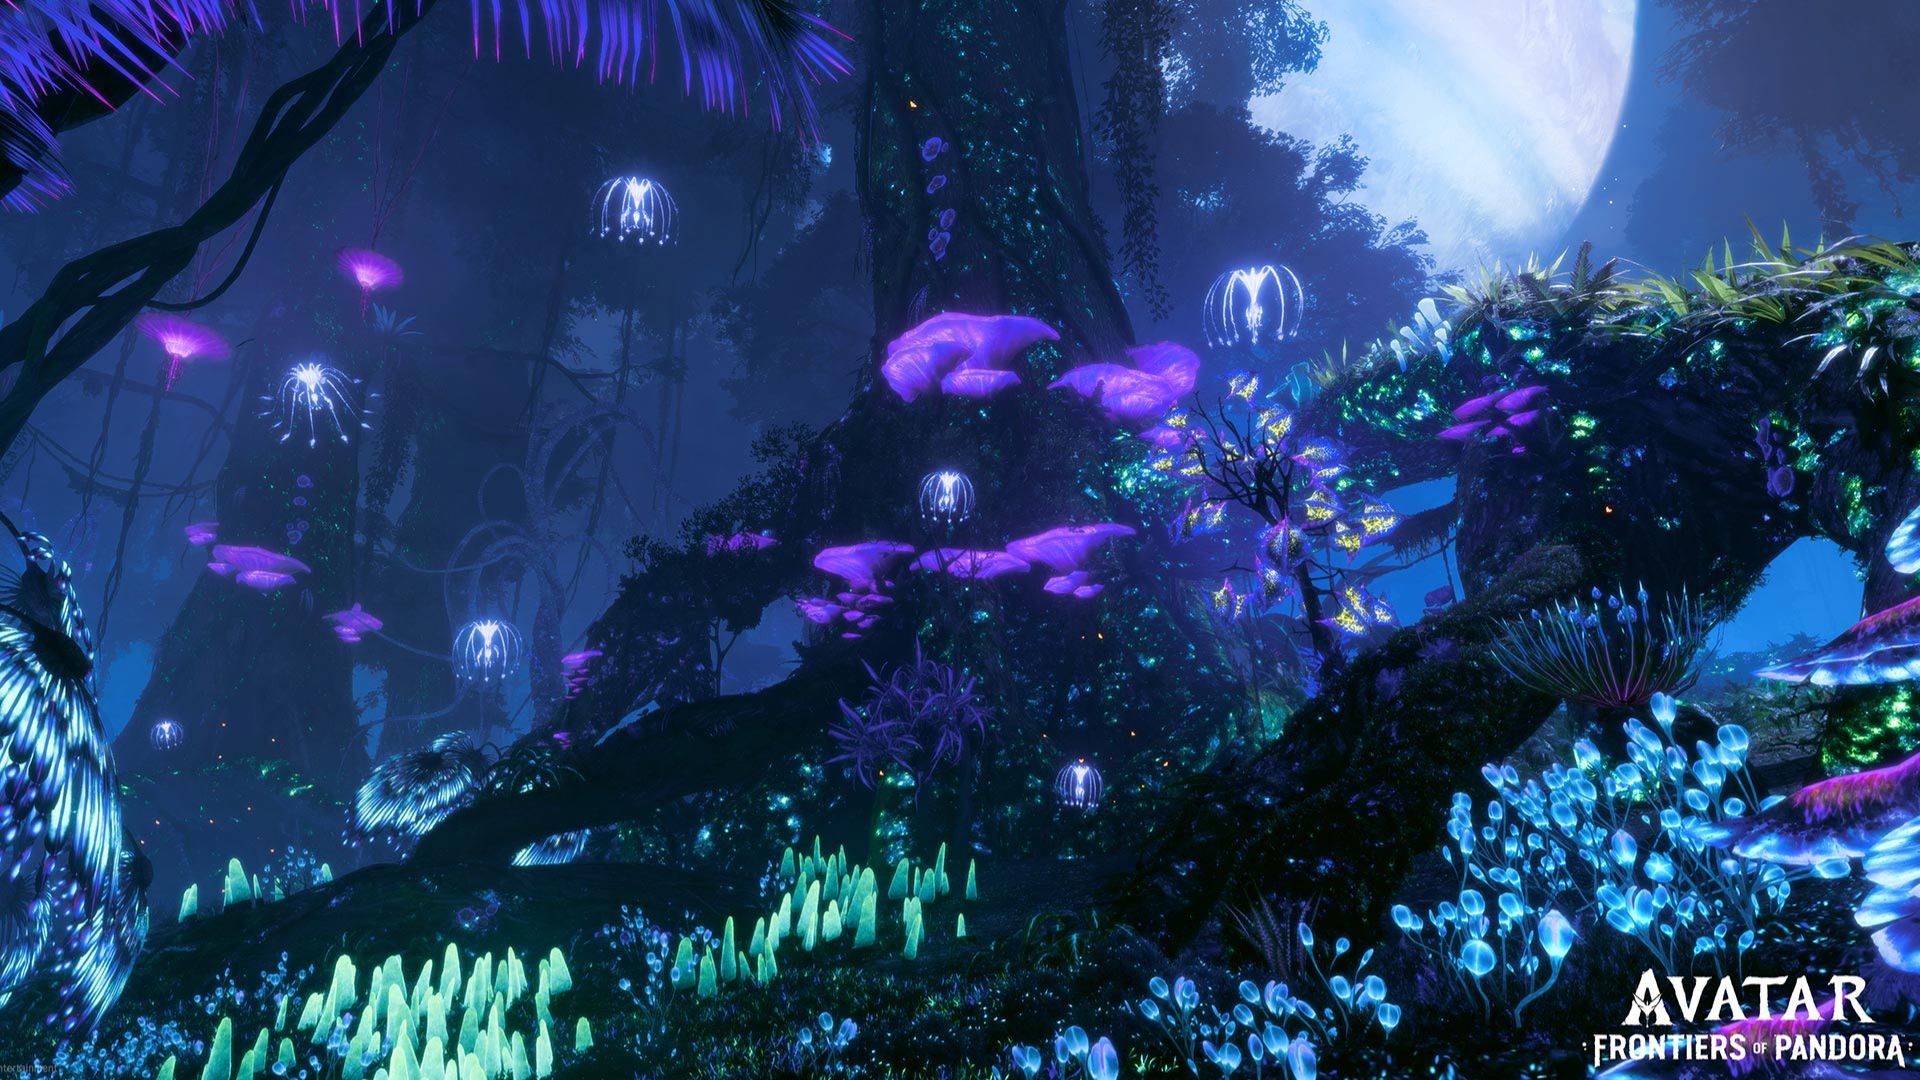 Avatar: Frontiers of Pandora image #2